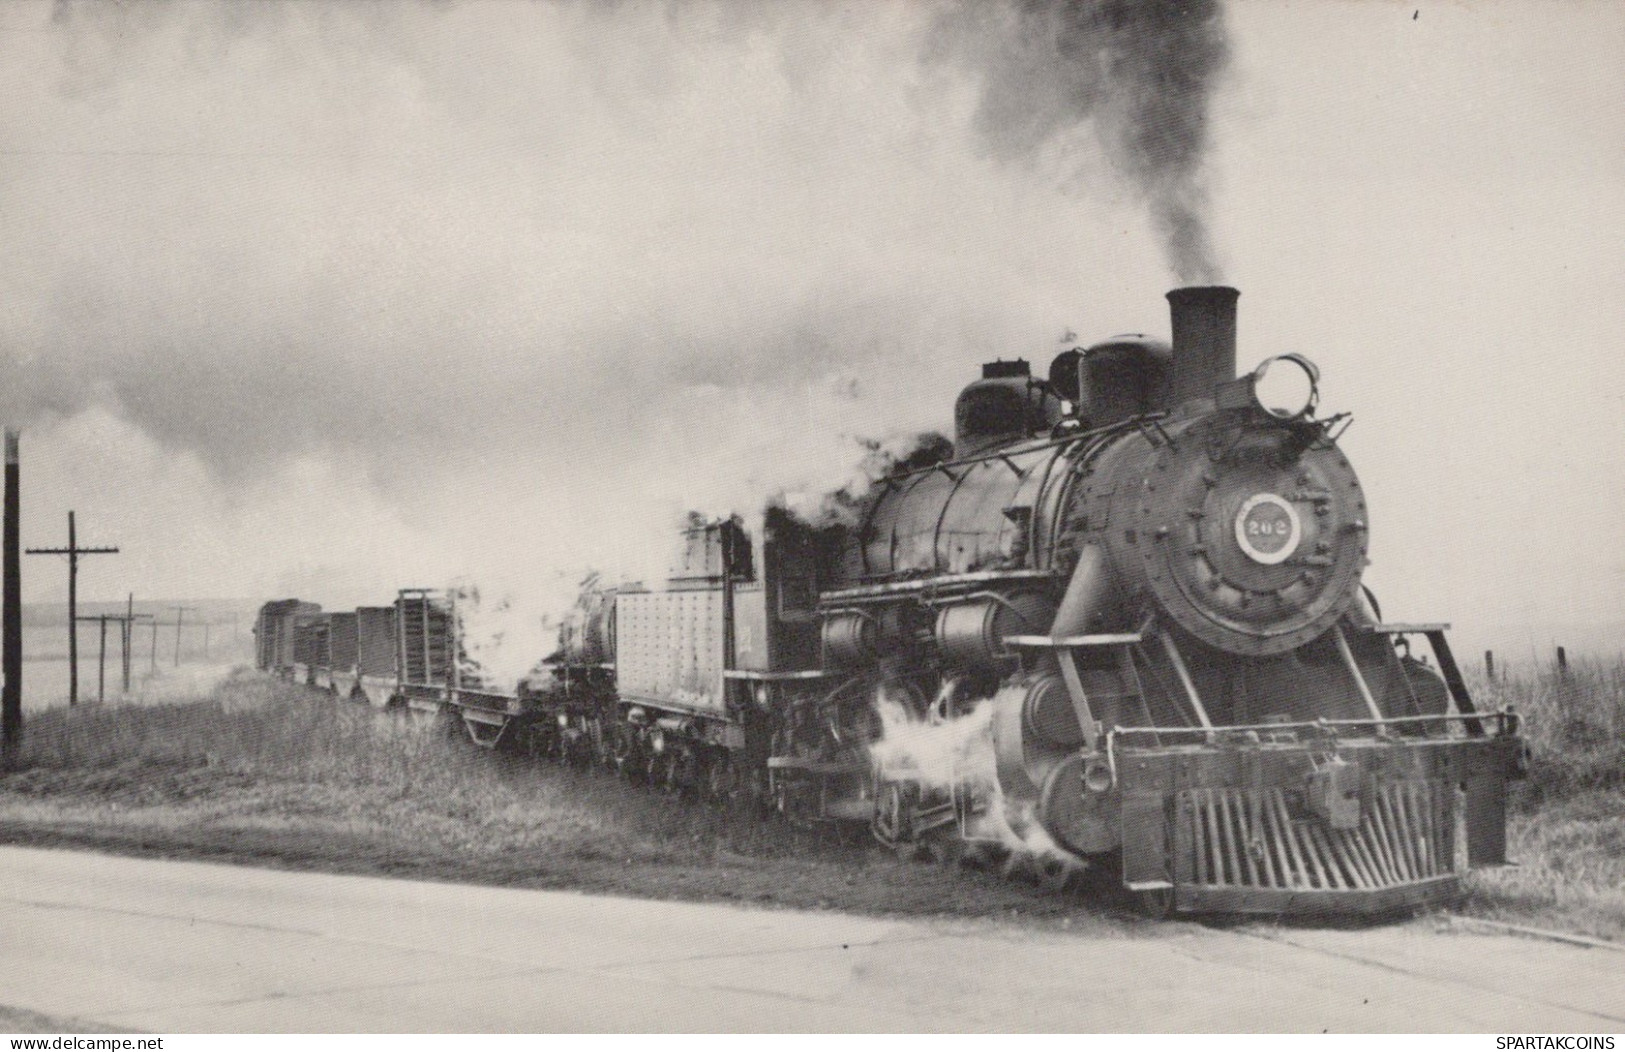 TREN TRANSPORTE Ferroviario Vintage Tarjeta Postal CPSMF #PAA387.A - Trains